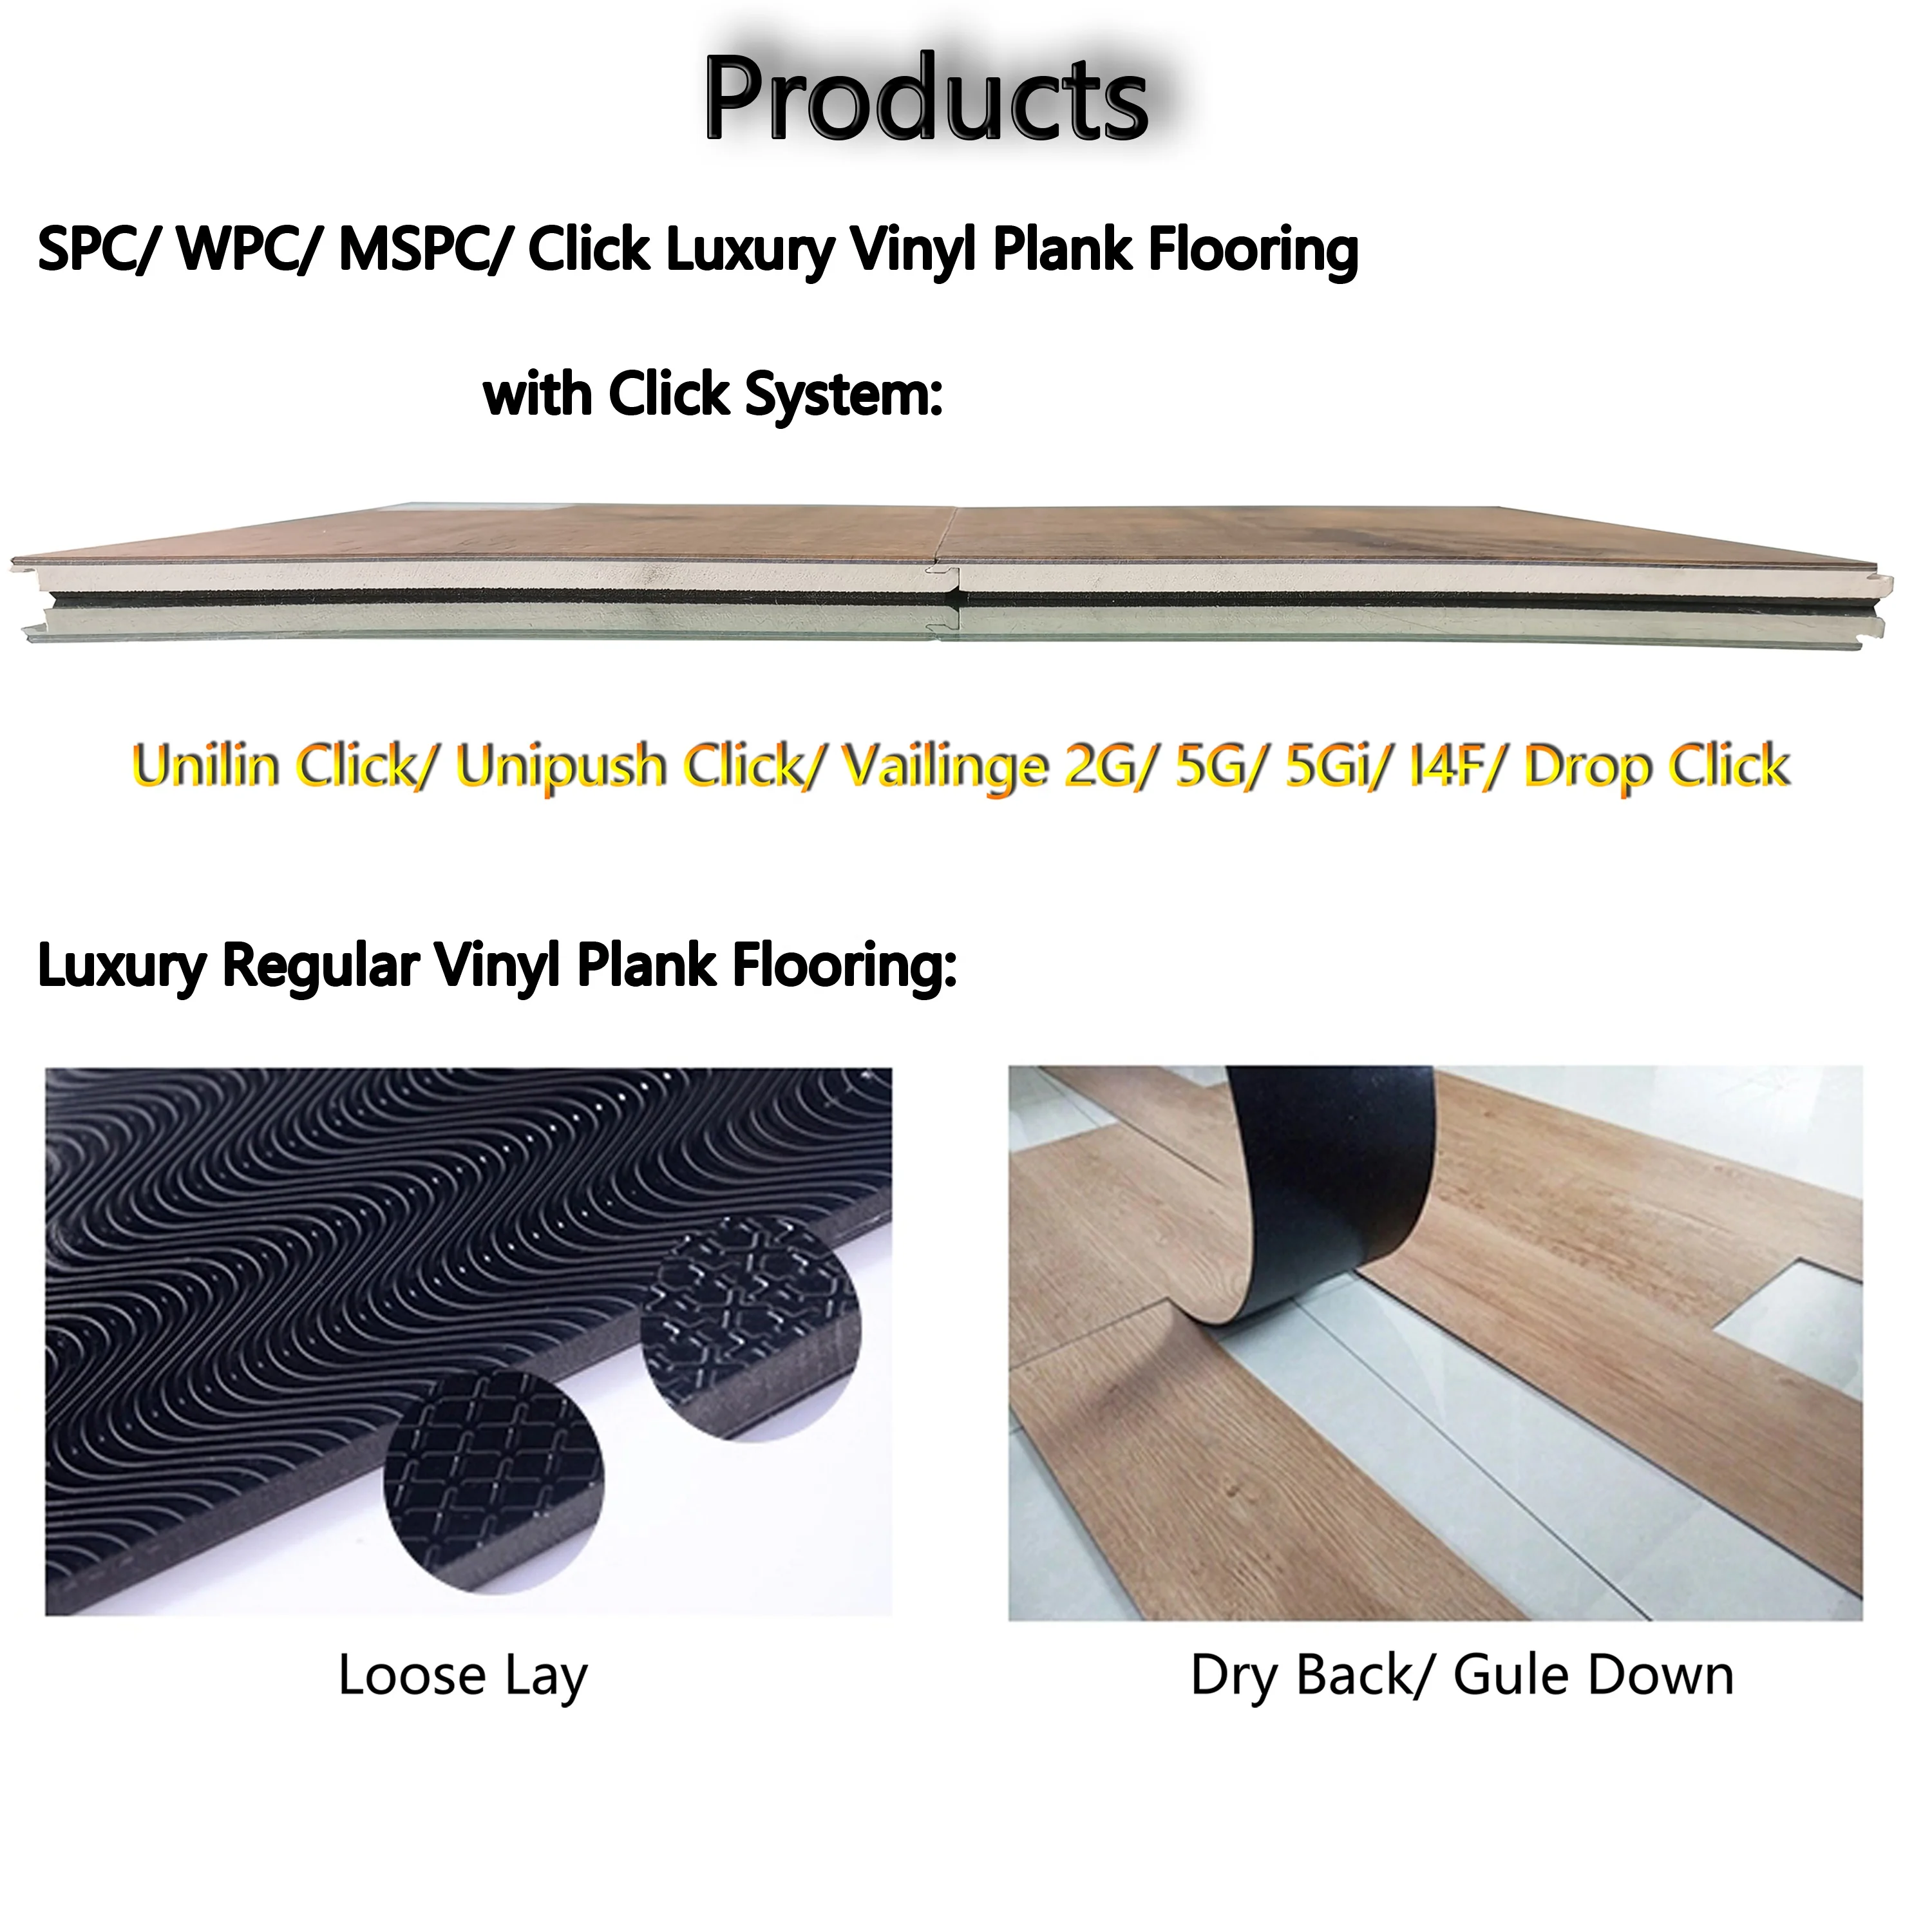 
Wood Grain Parquet Effect Loose Lay PVC Vinyl LVT Plank Flexible Flooring 